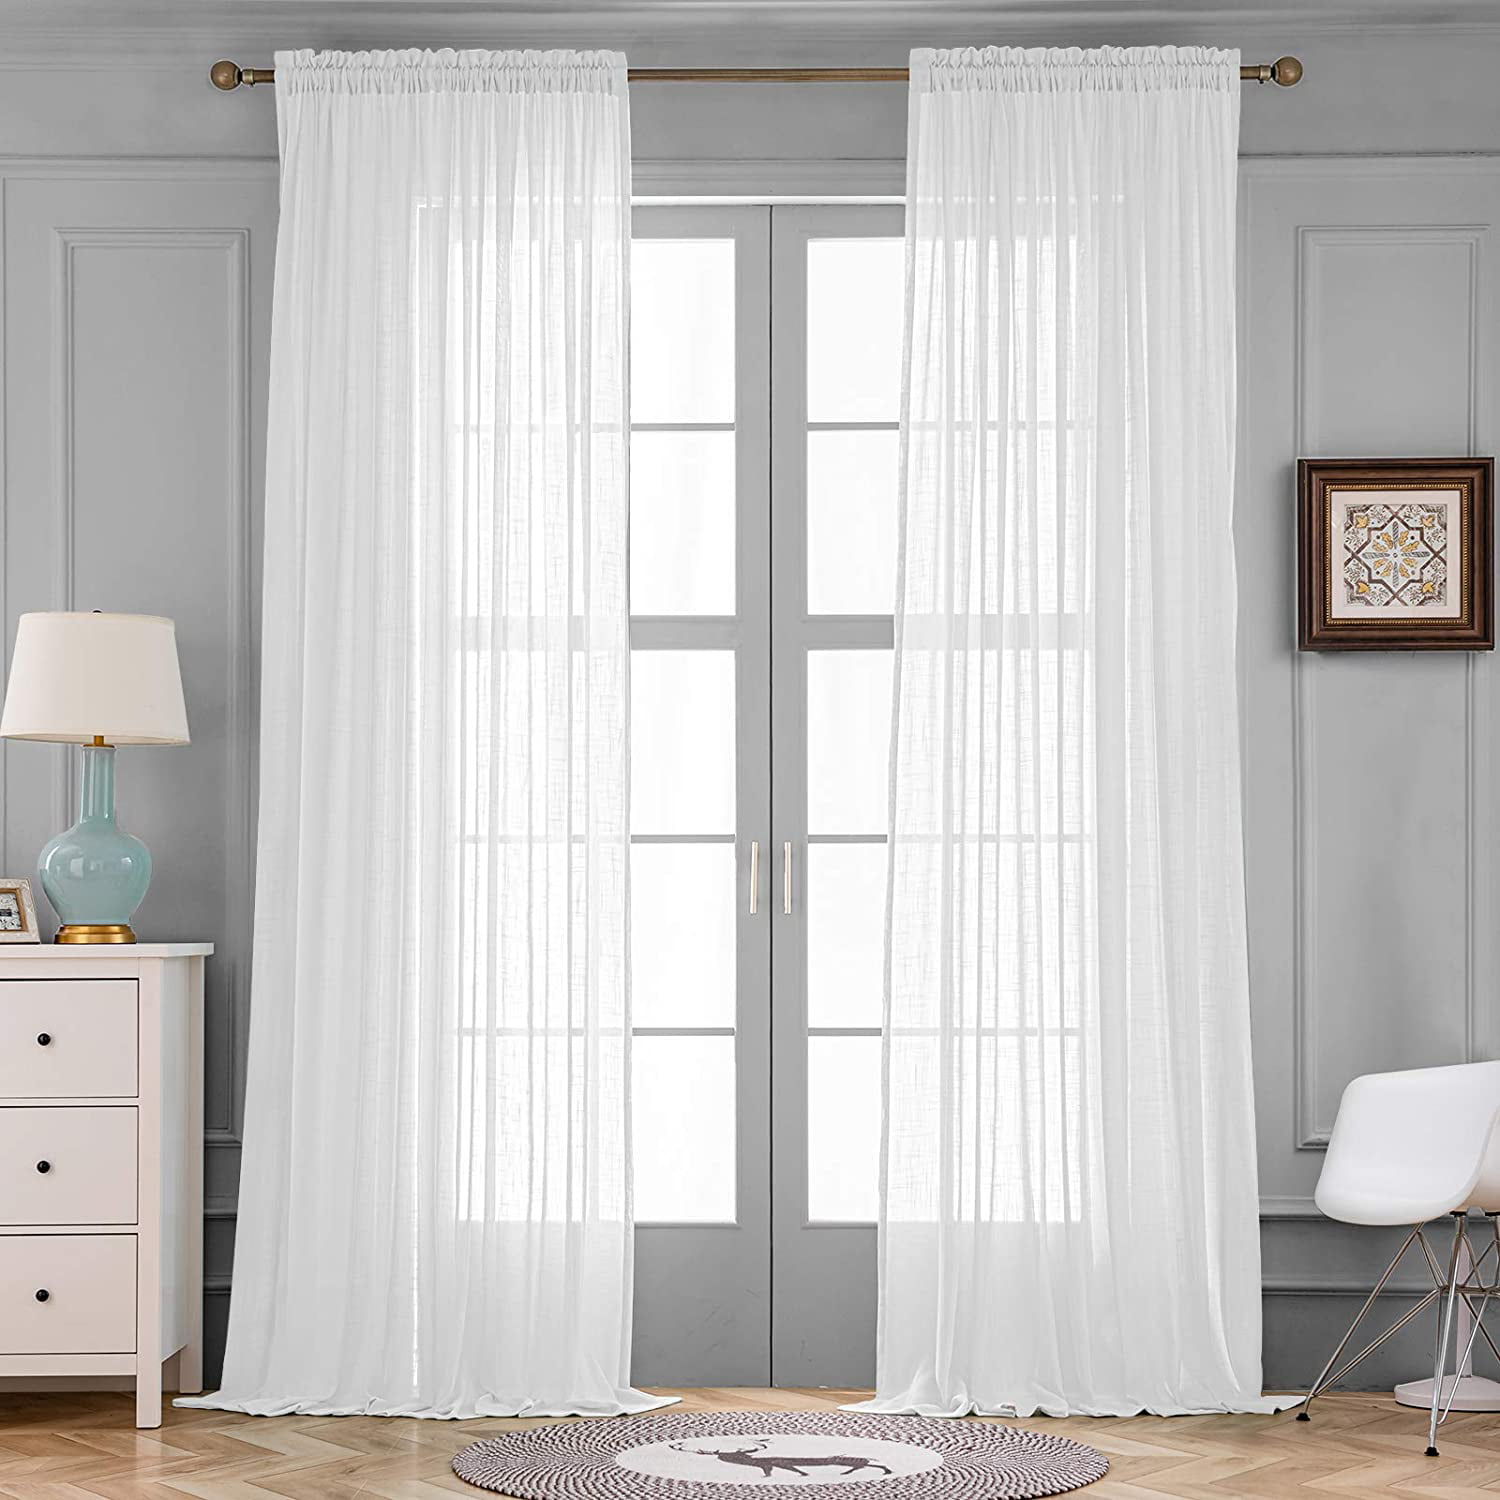 DONREN White Sheer Curtains 84 inches Long for Living Room Bedroom Sheer Curtain Panels Rod Pocket Linen Voile Window Curtain Set 2 Panels, White DONREN TEXTILE 